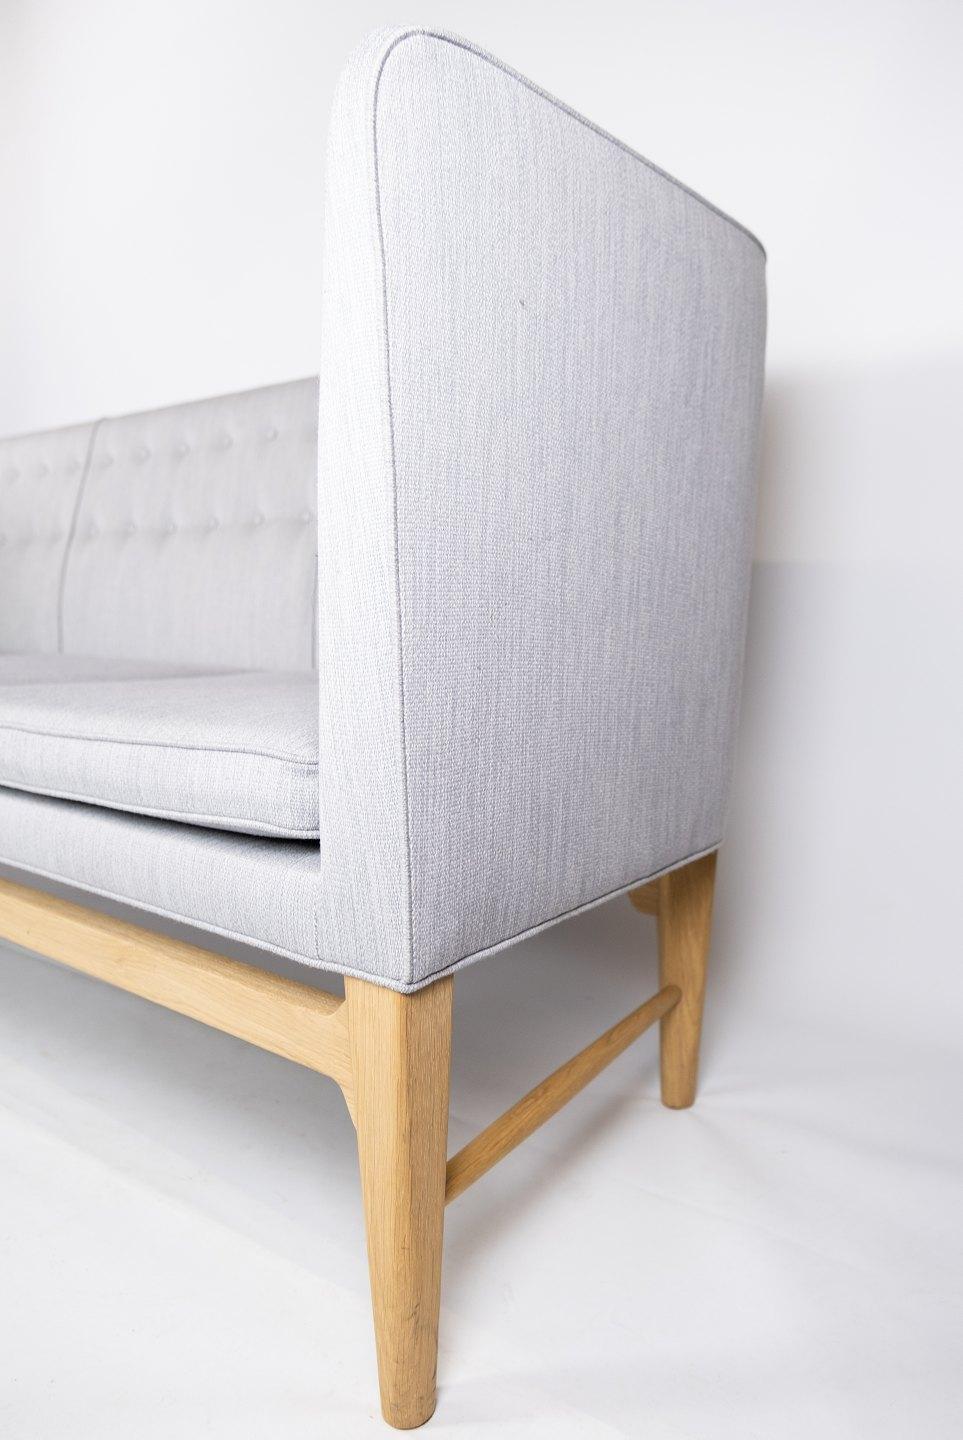 Wool Mayor Sofa, Model AJ5, Designed by Arne Jacobsen and Flemming Lassen For Sale